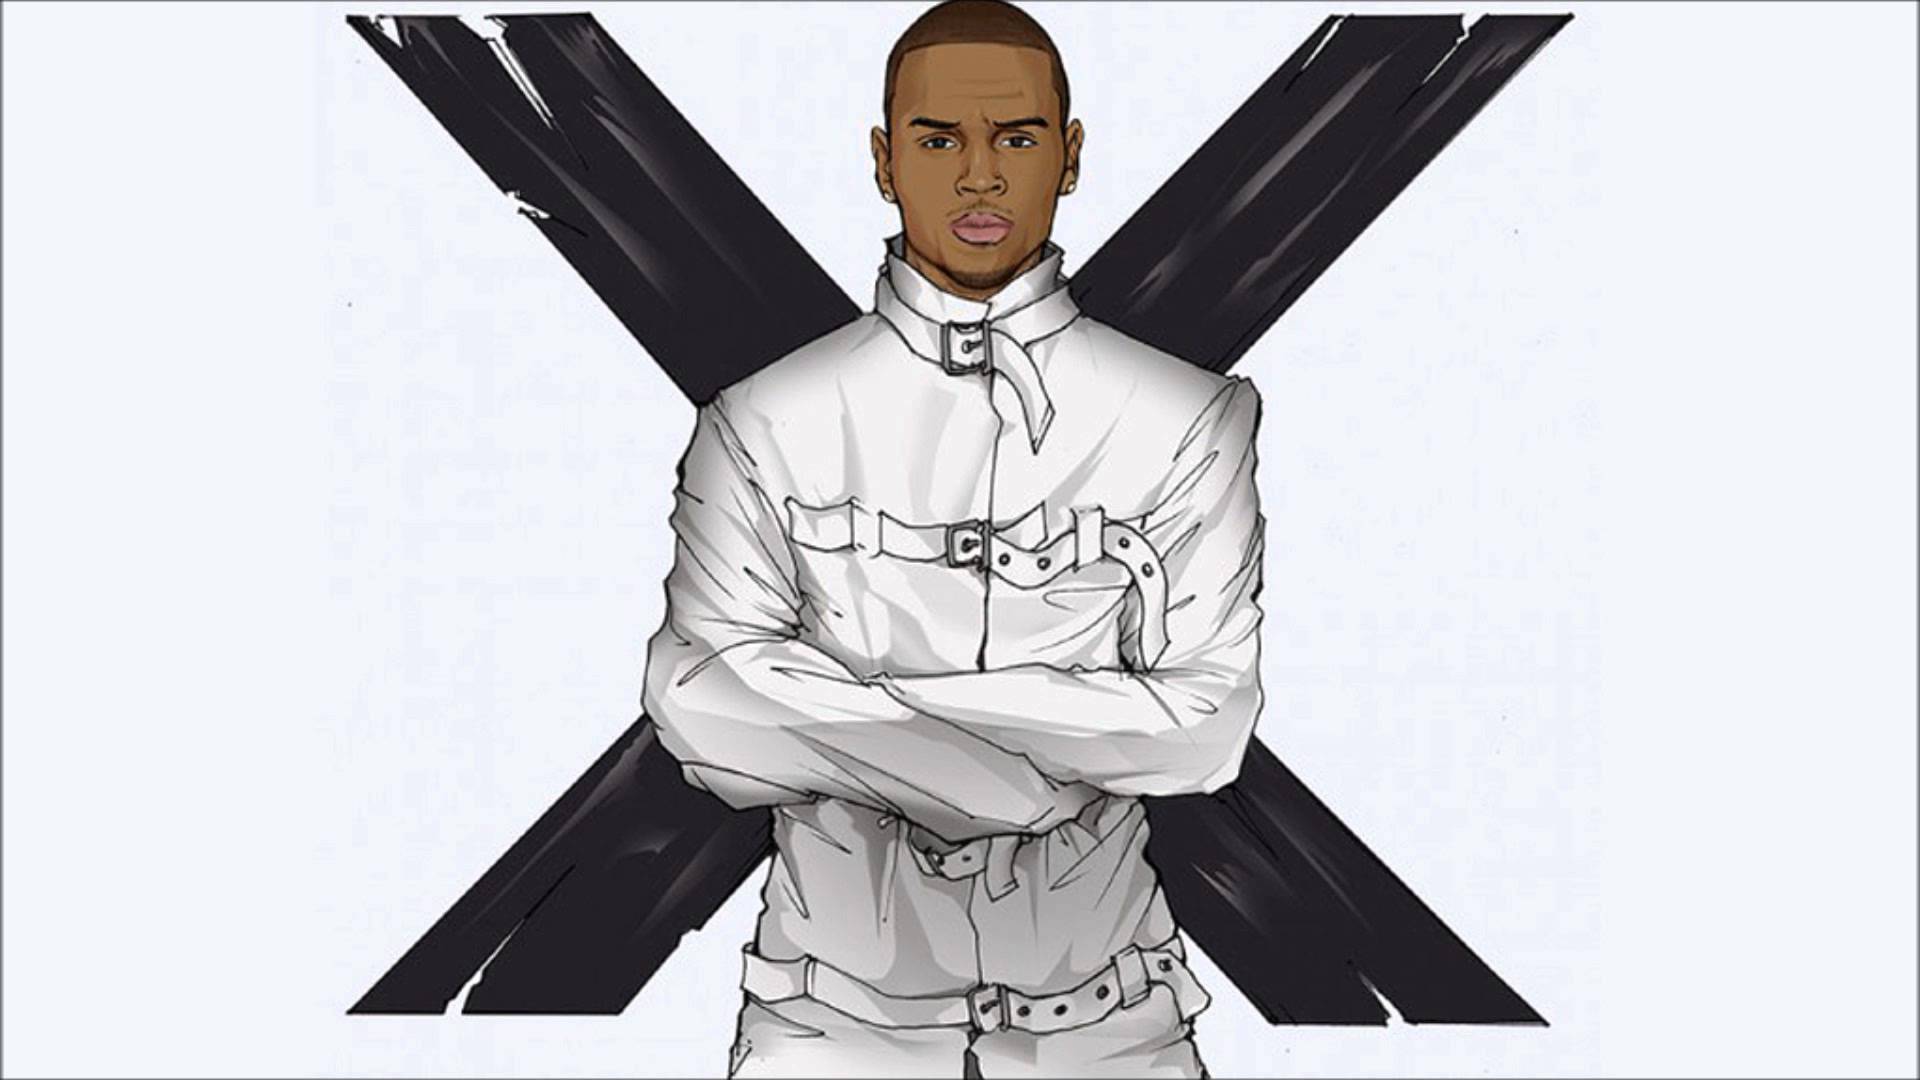 Wallpaper.wiki Chris Brown Wallpaper Dancer Hd Image PIC